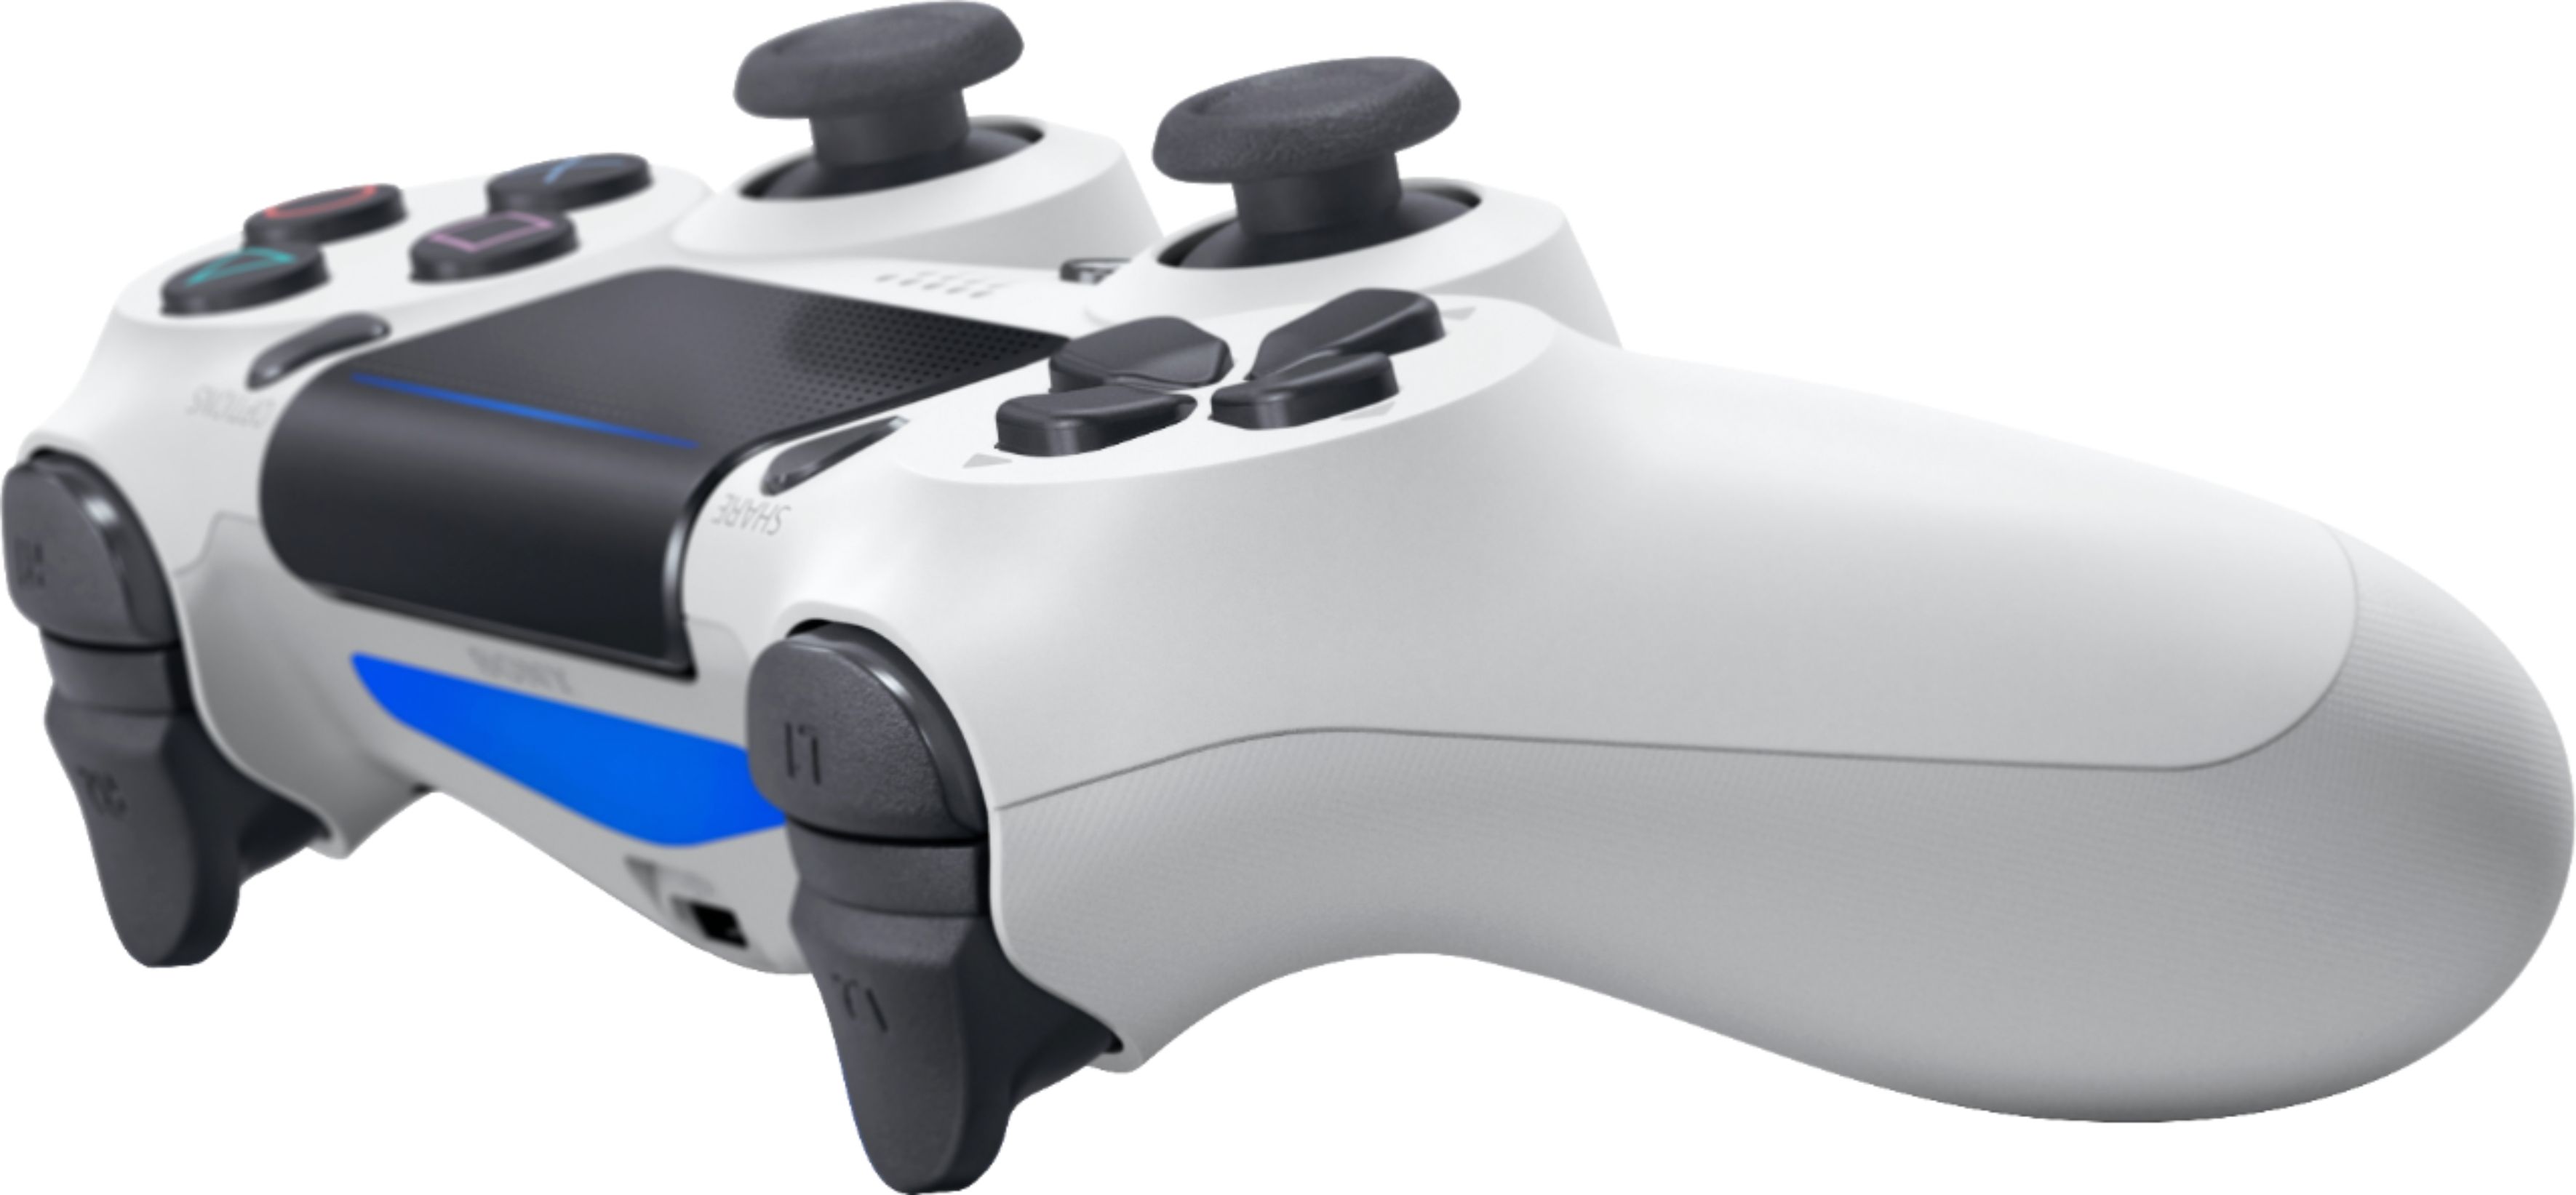 Sony DualShock 4 Wireless Controller for PlayStation 4  - Best Buy